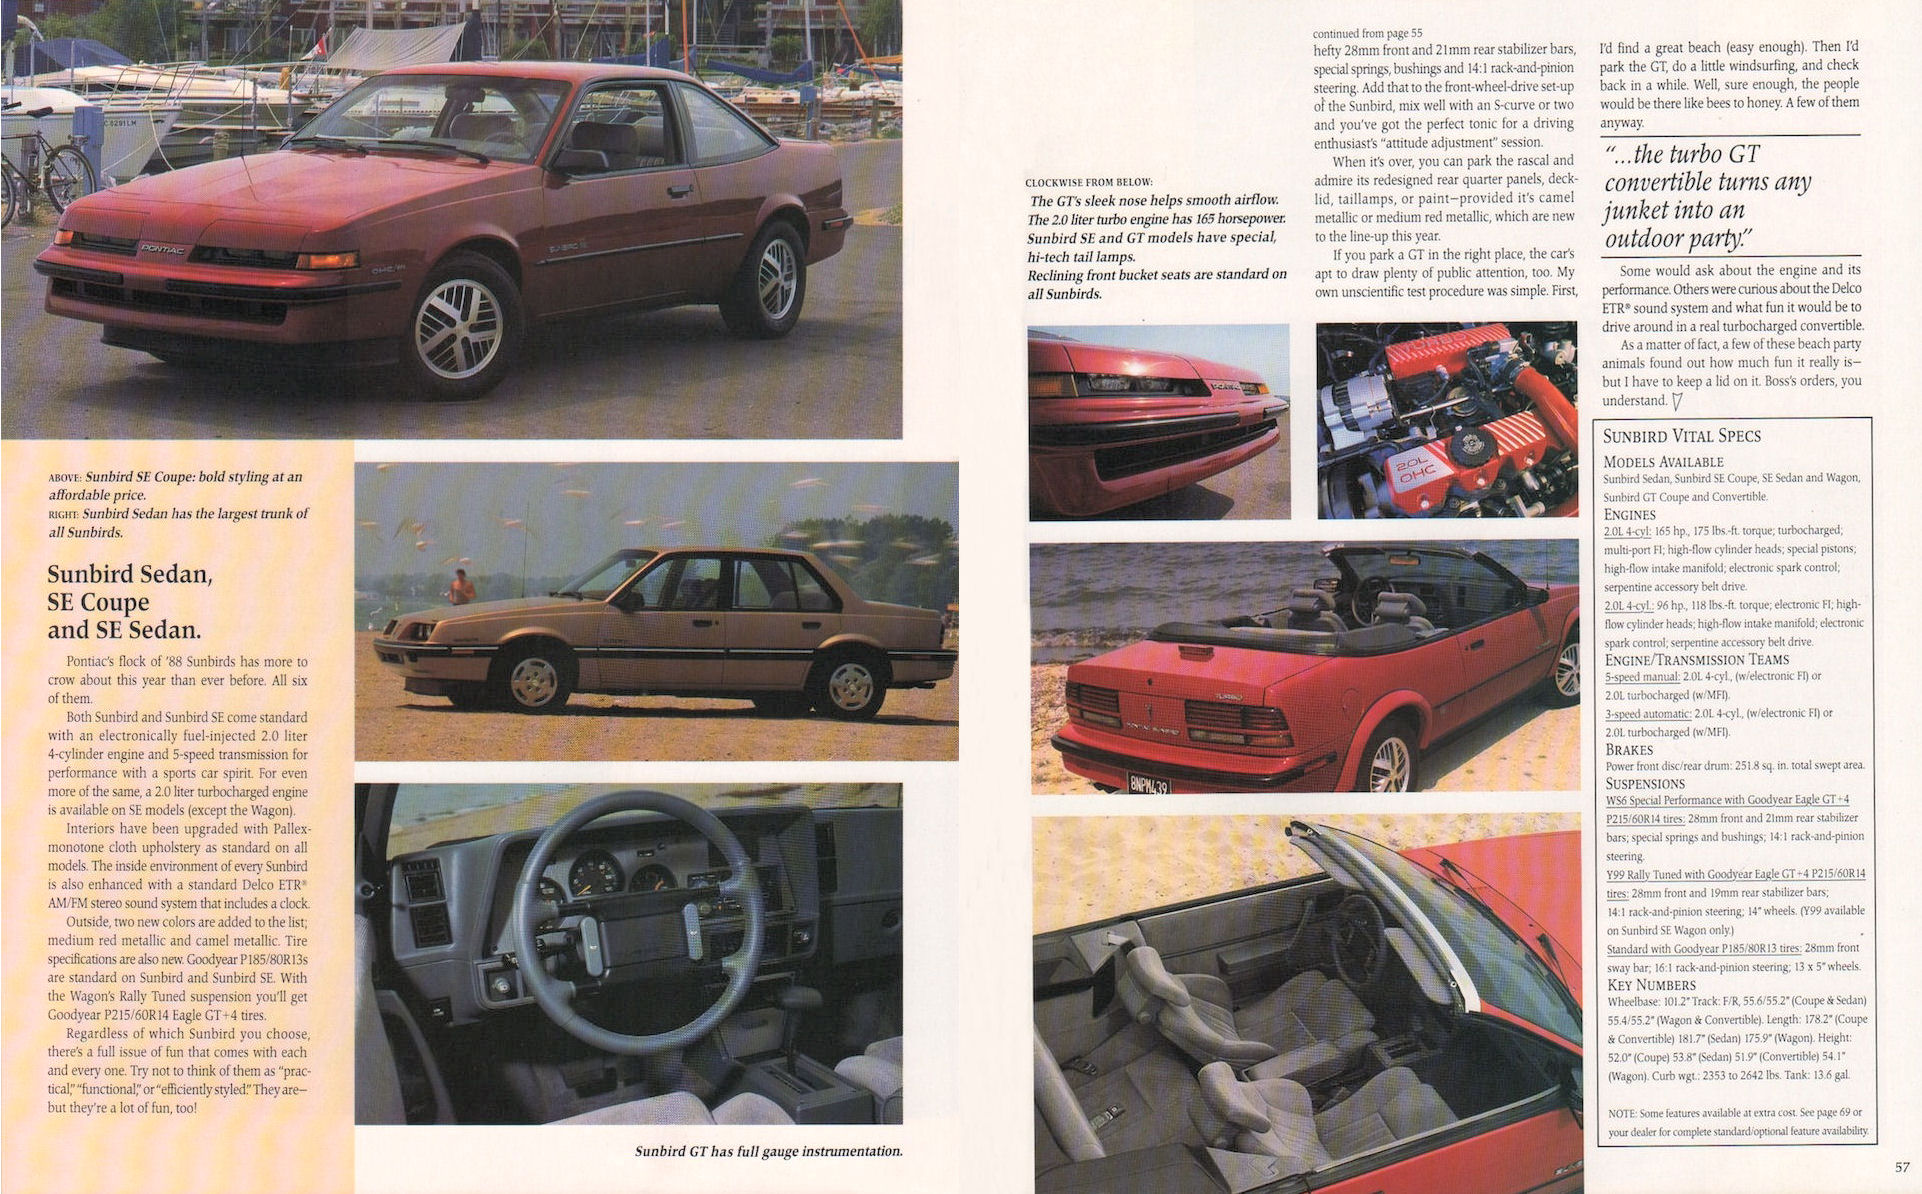 1988_Pontiac_Full_Line_Prestige-56-57